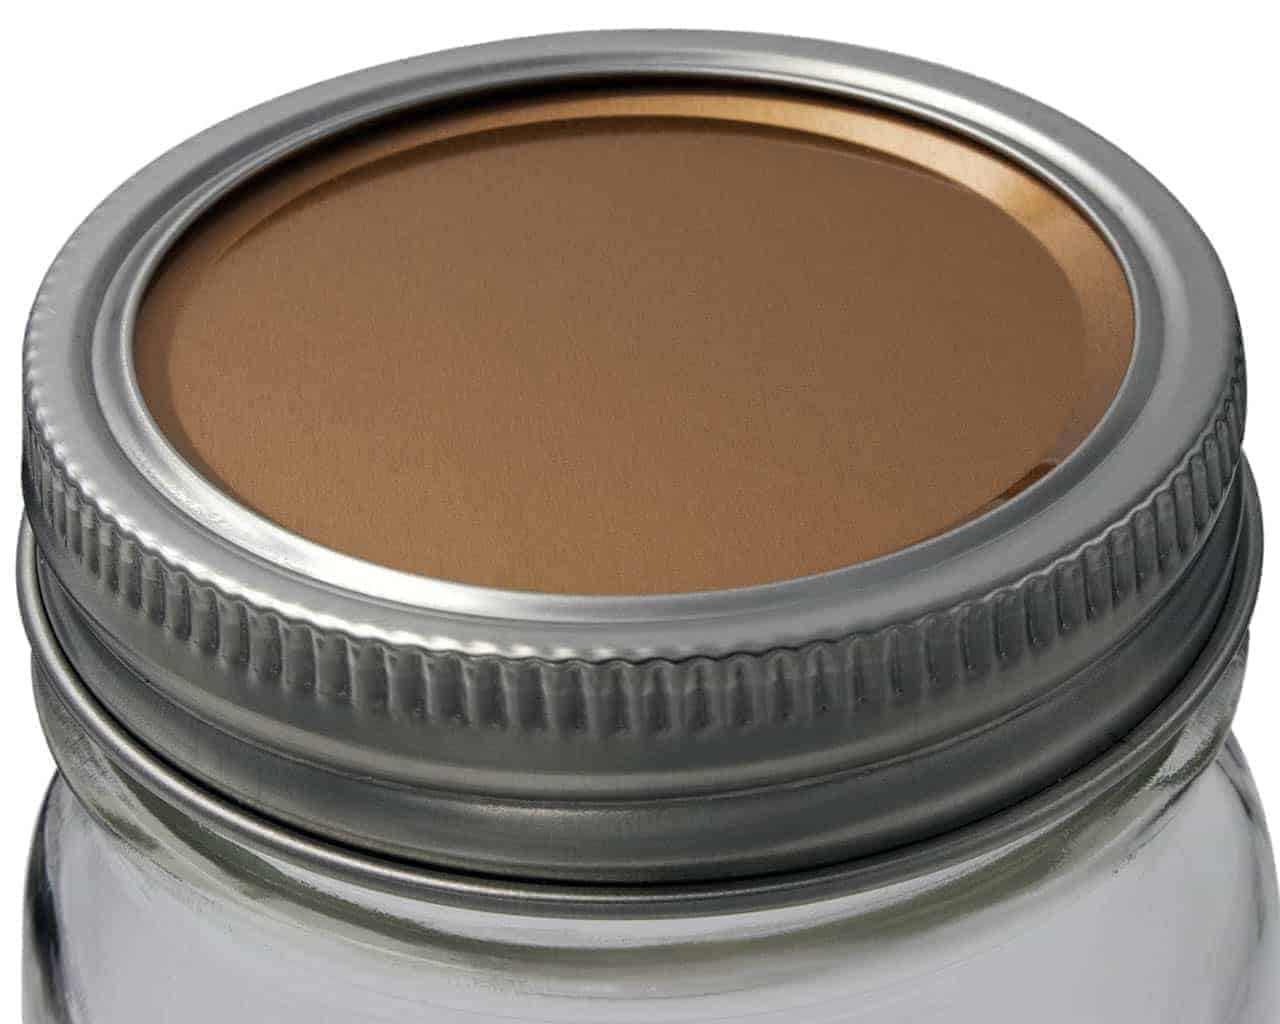 mason-jar-lifestyle-copper-flat-storage-lid-insert-with-stainless-steel-band-regular-mouth-mason-jar